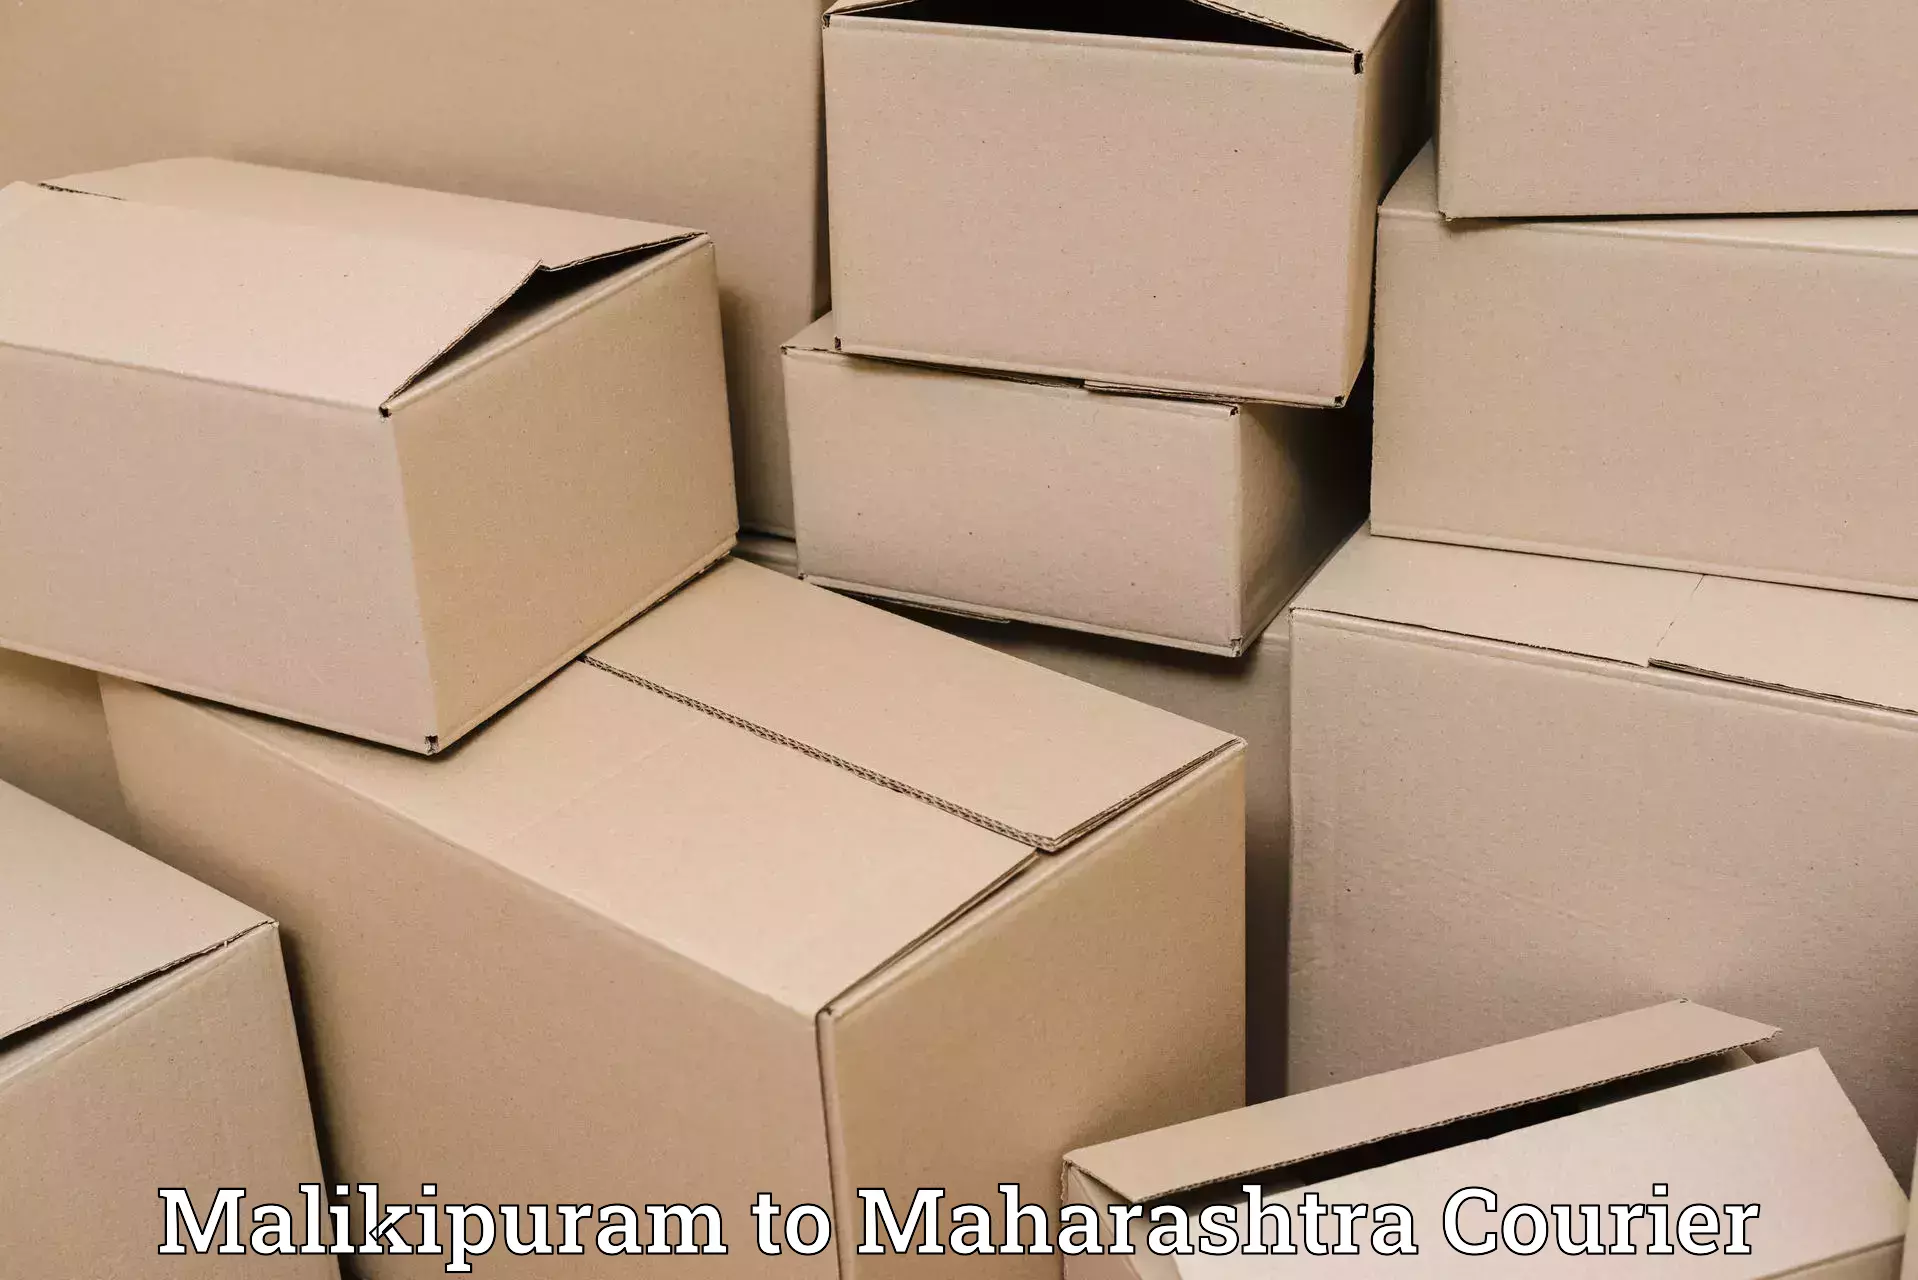 Advanced shipping technology Malikipuram to Mumbai Port